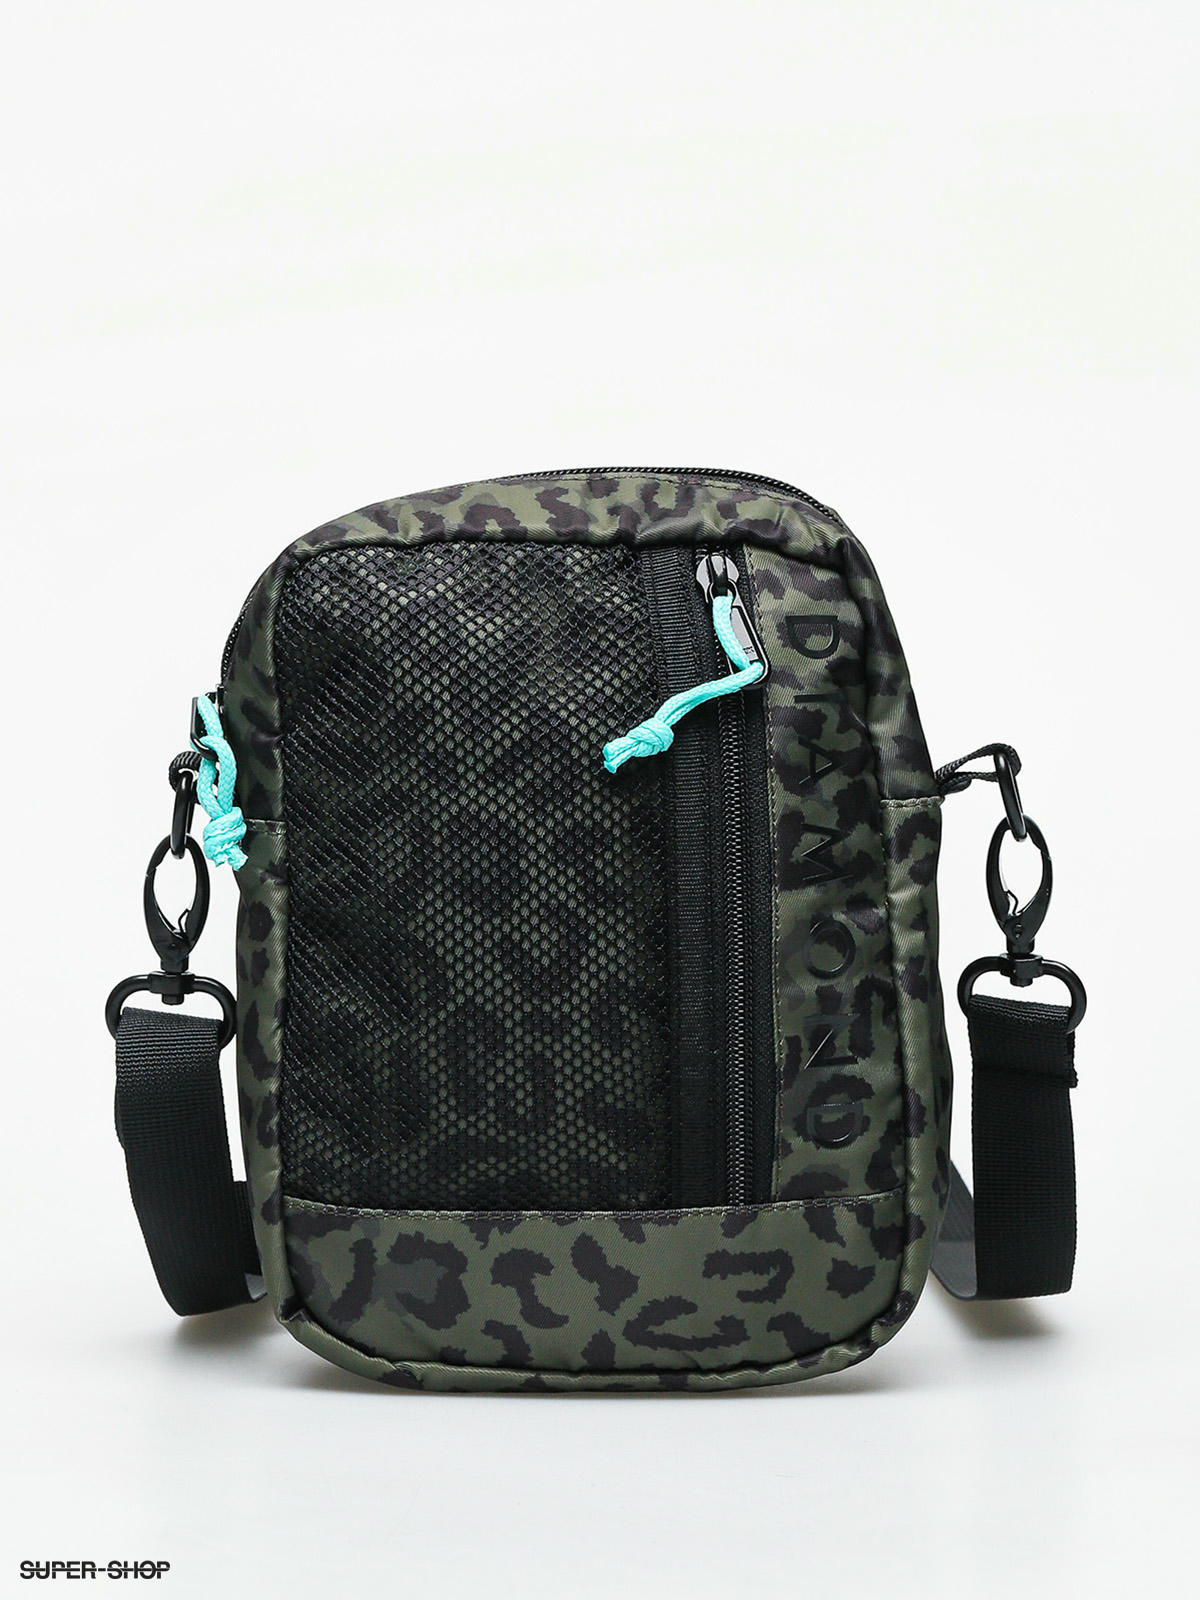 diamond supply co backpack